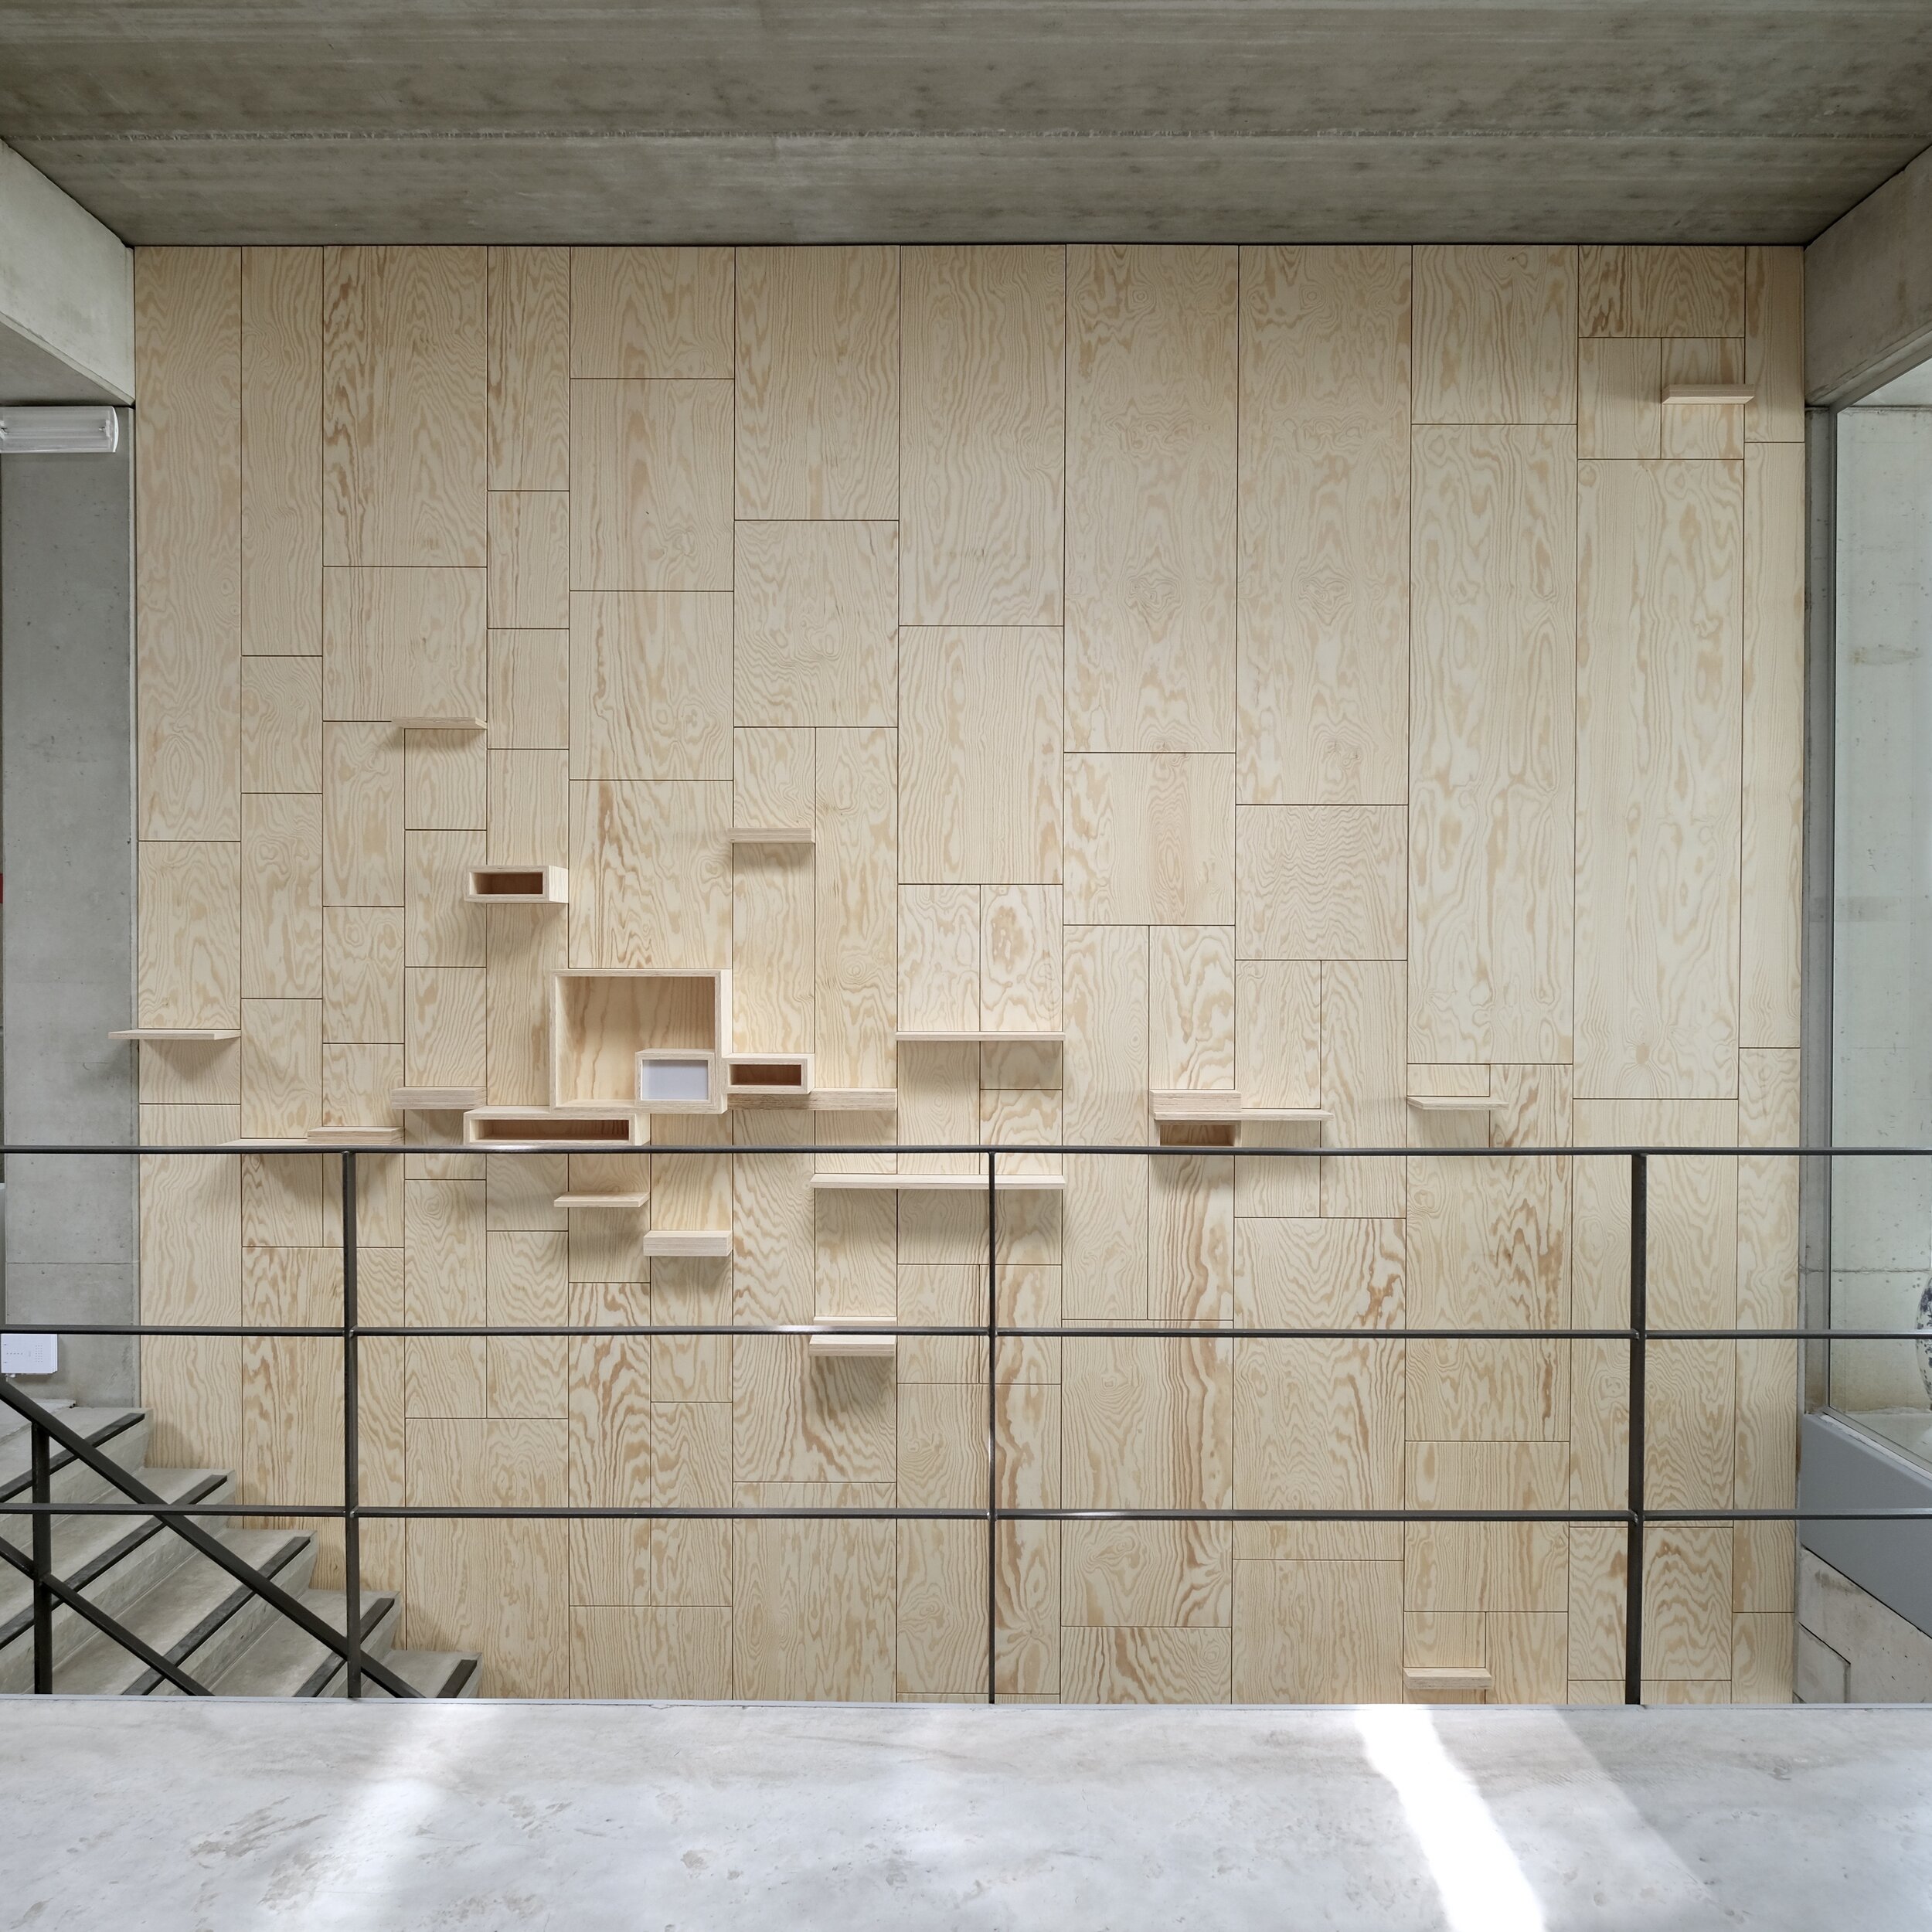 Erpe Mere Presentation cabinet design by Filip Janssens 2019 2.jpeg